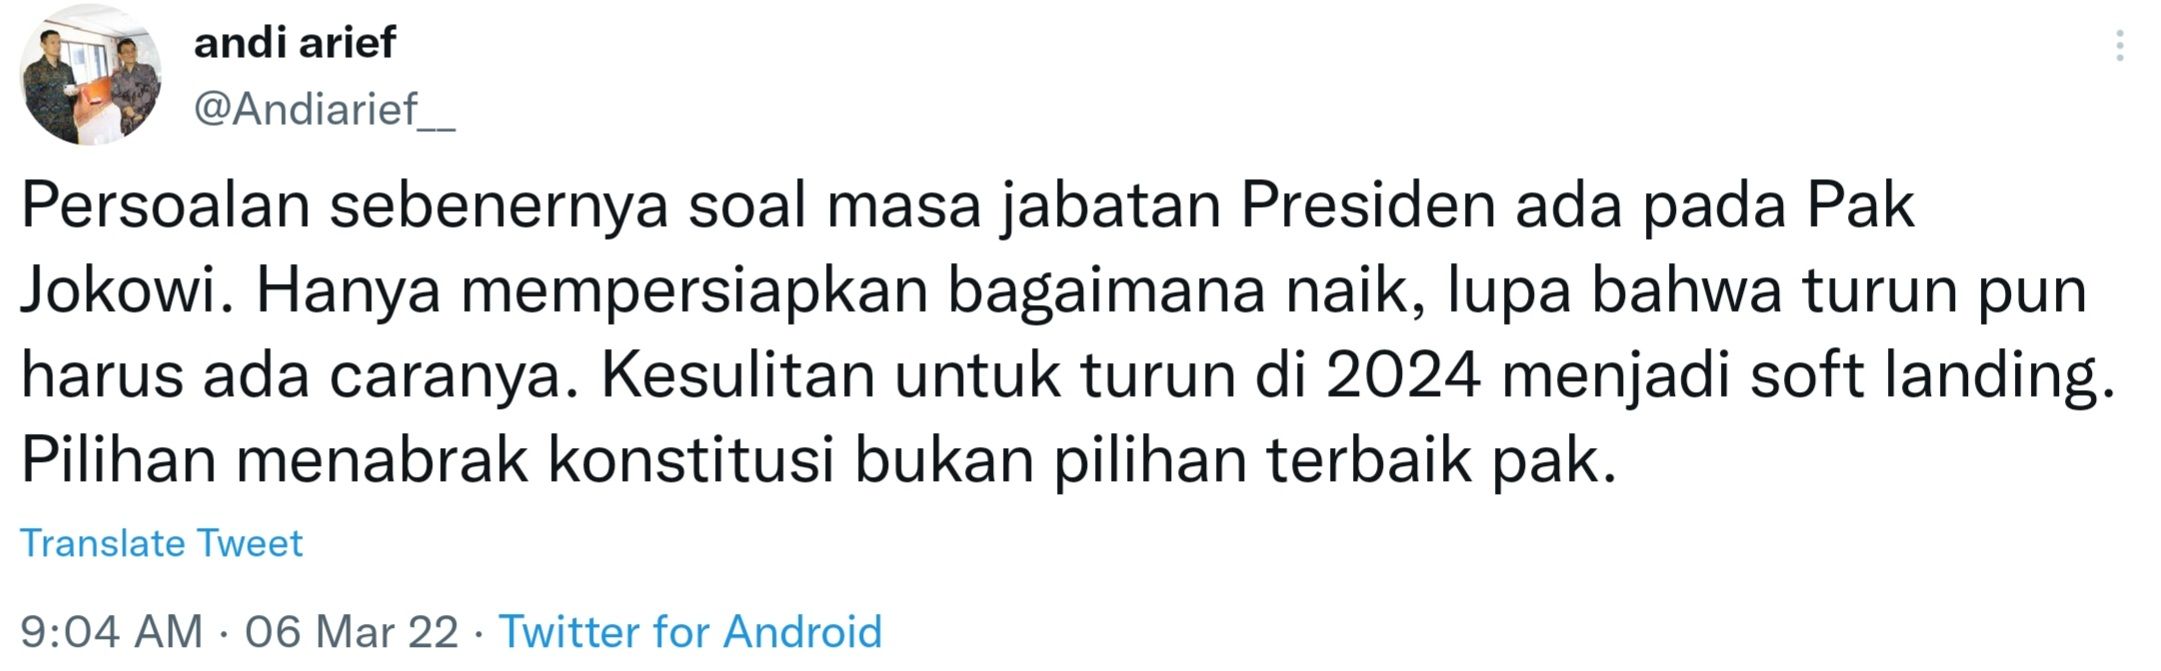 Cuitan Andi Arief merespons isu penundaan Pemilu 2024.